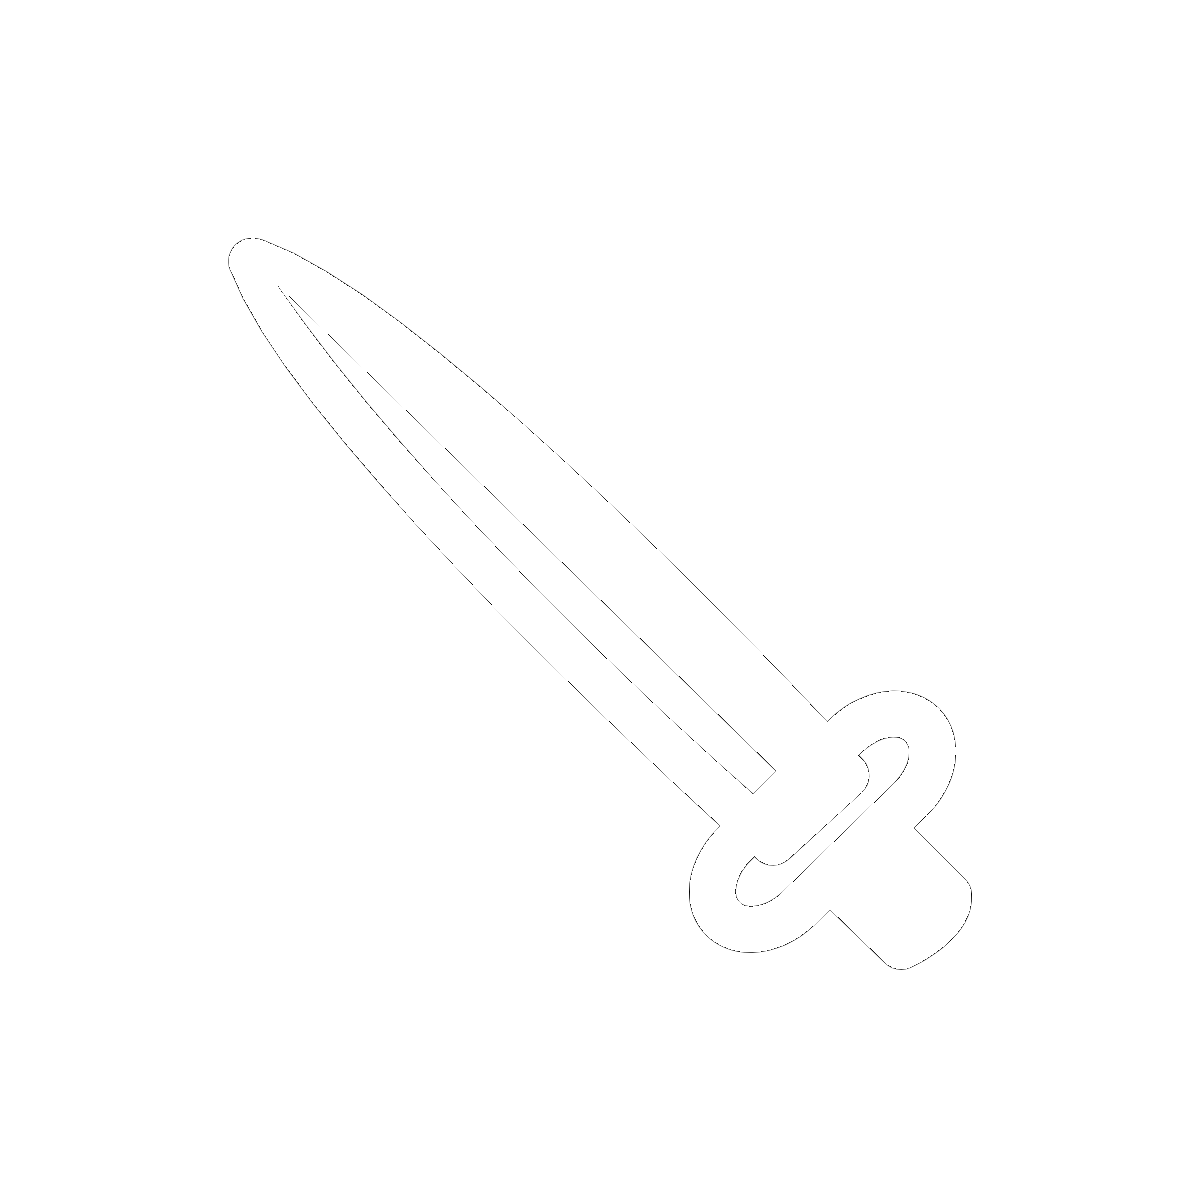 Symbol The Double-Edged Sword